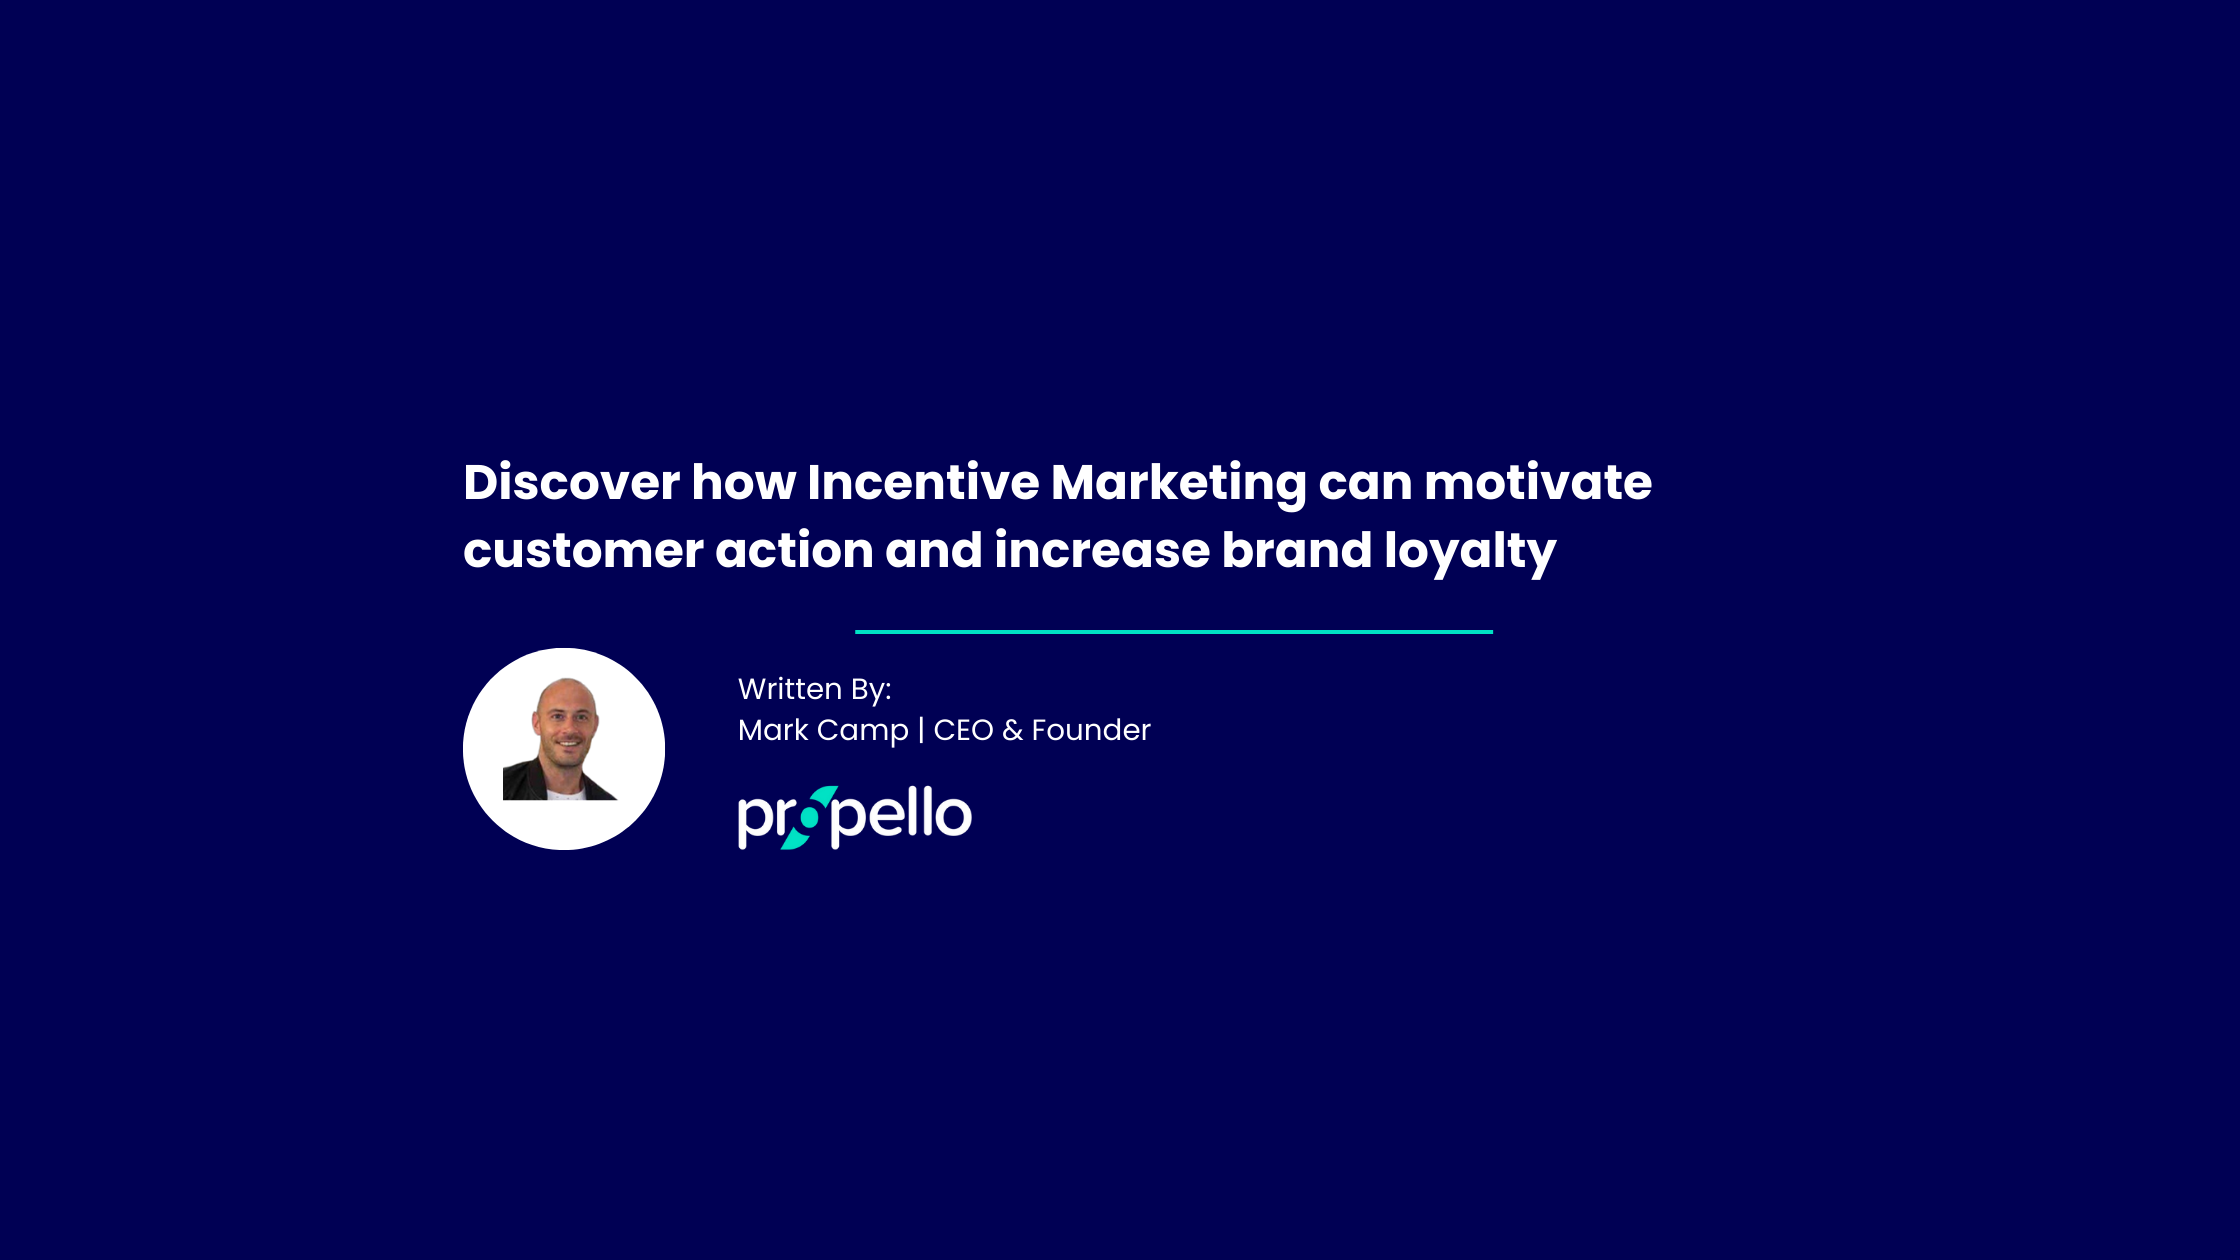 Incentive Marketing